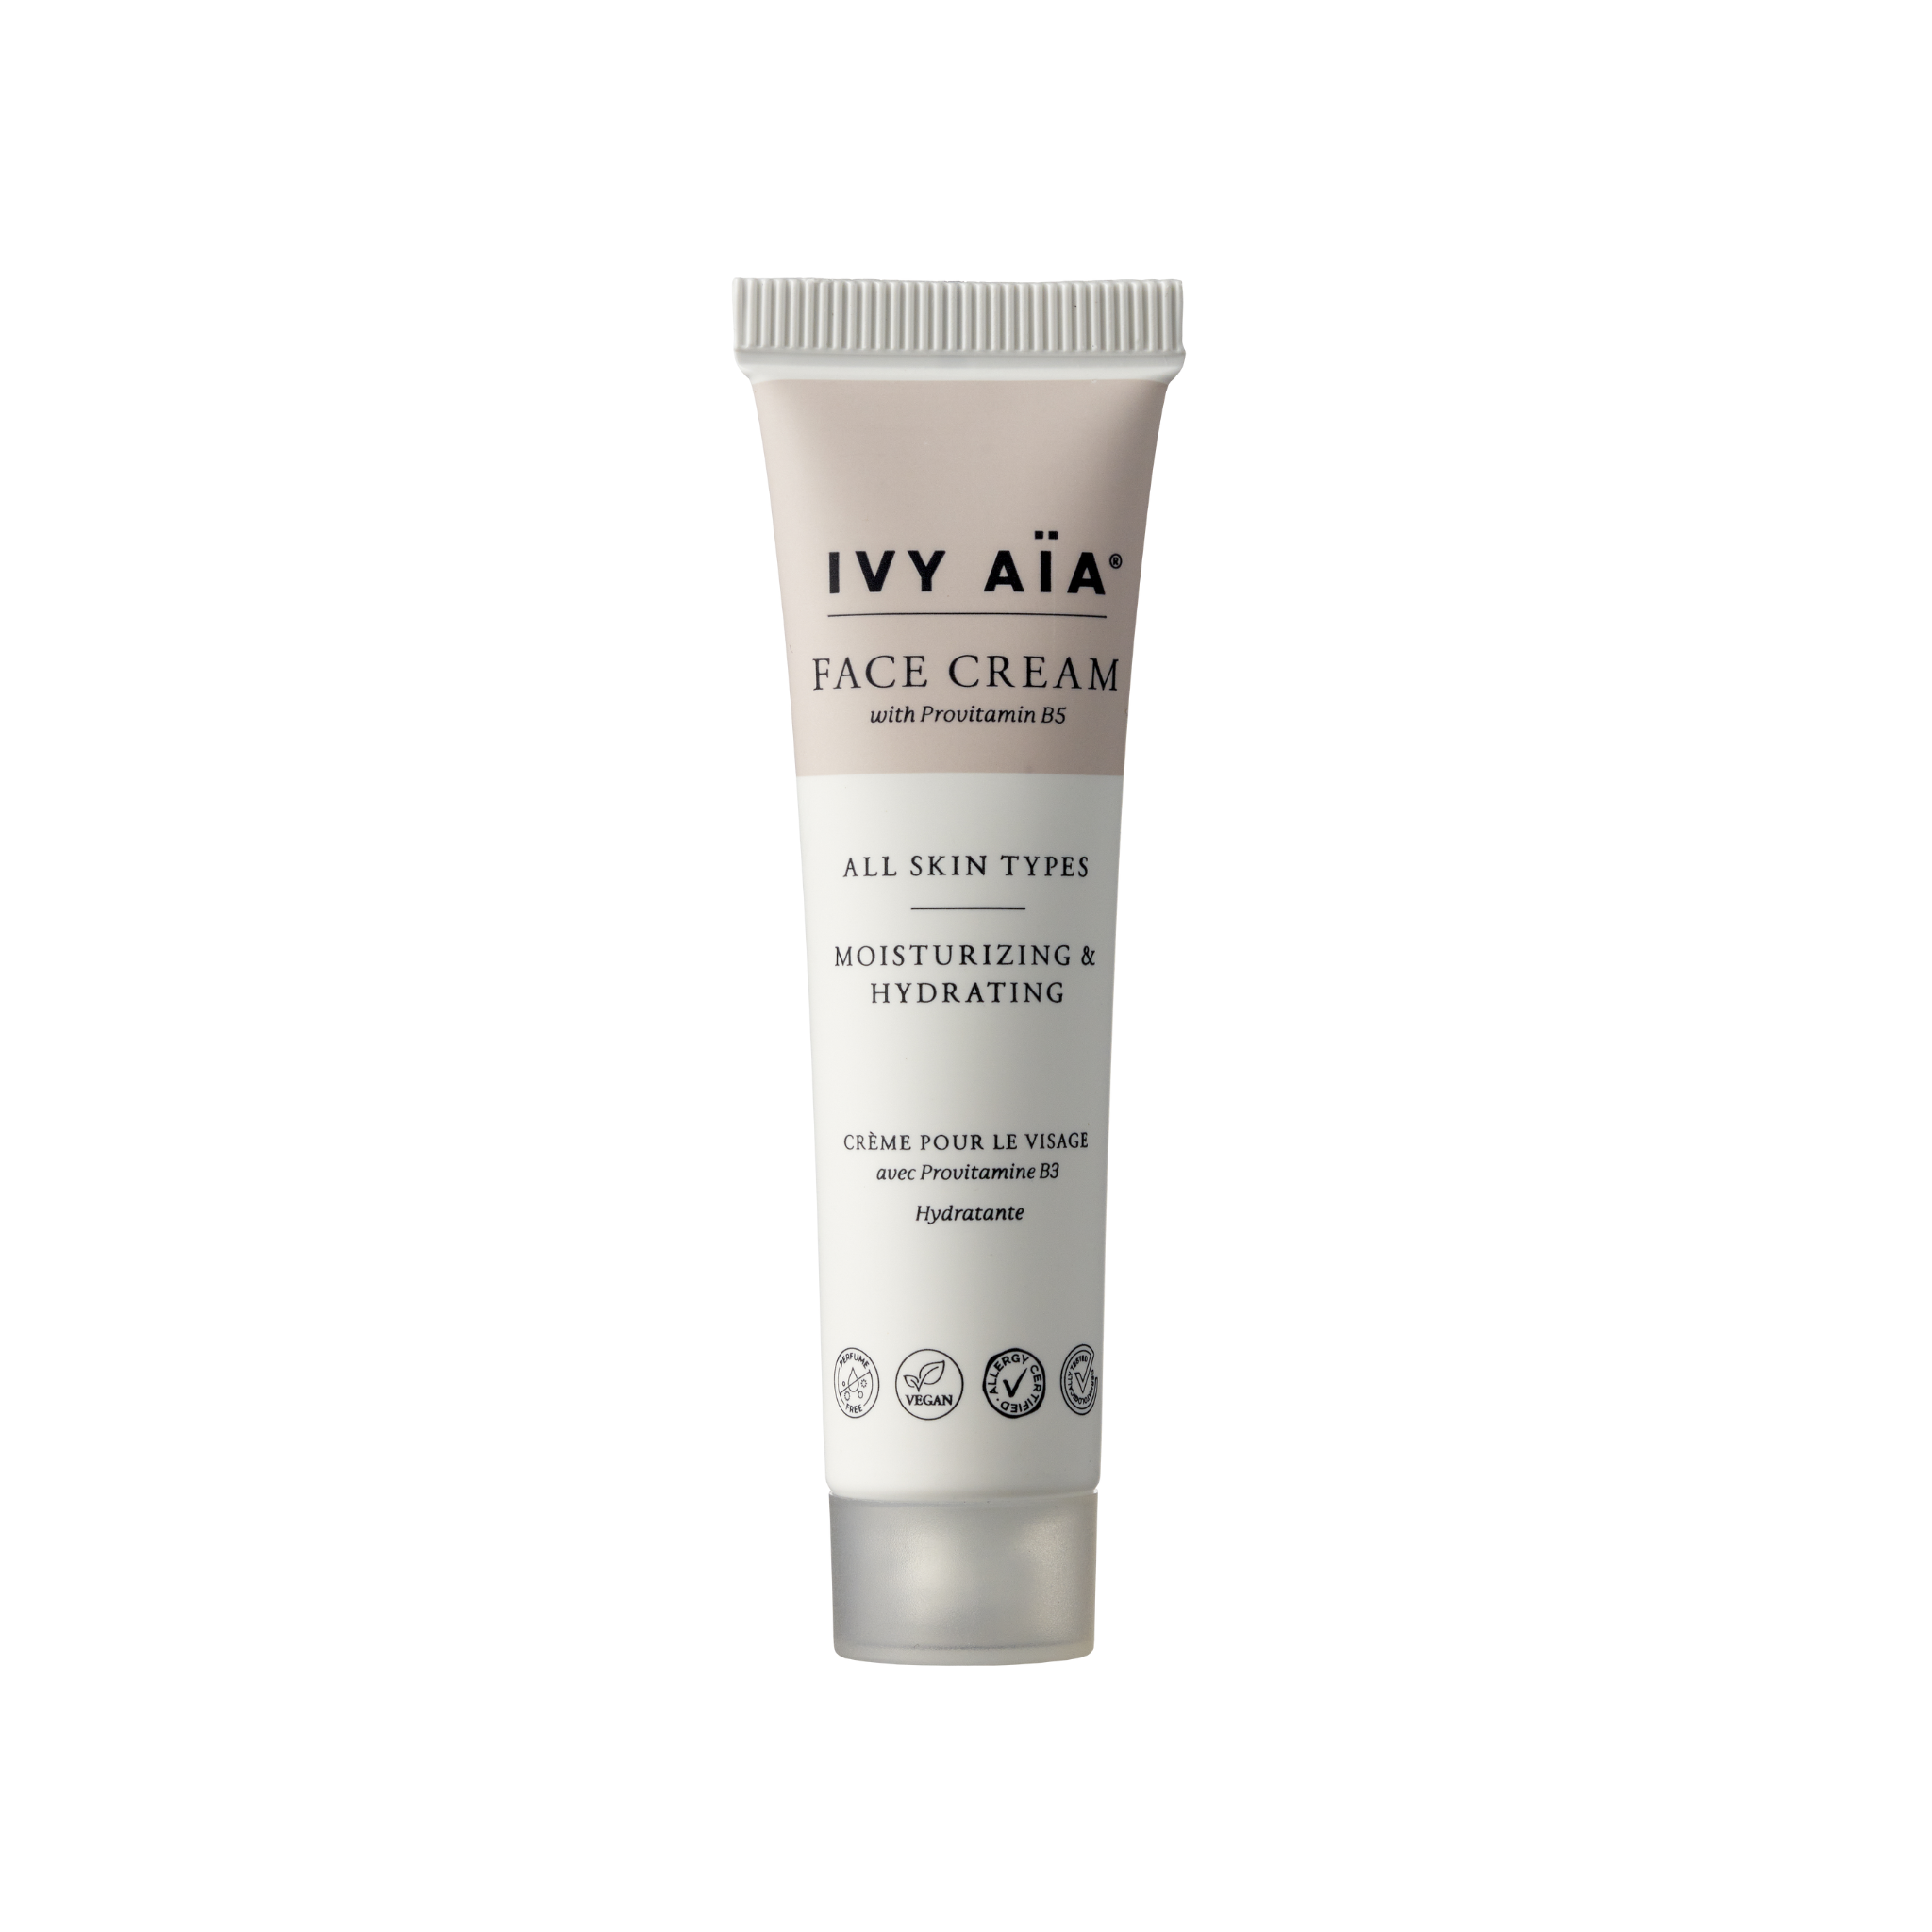 Ivy Aïa Face Cream With Provitamin B5, Travel Size, 15 ml.